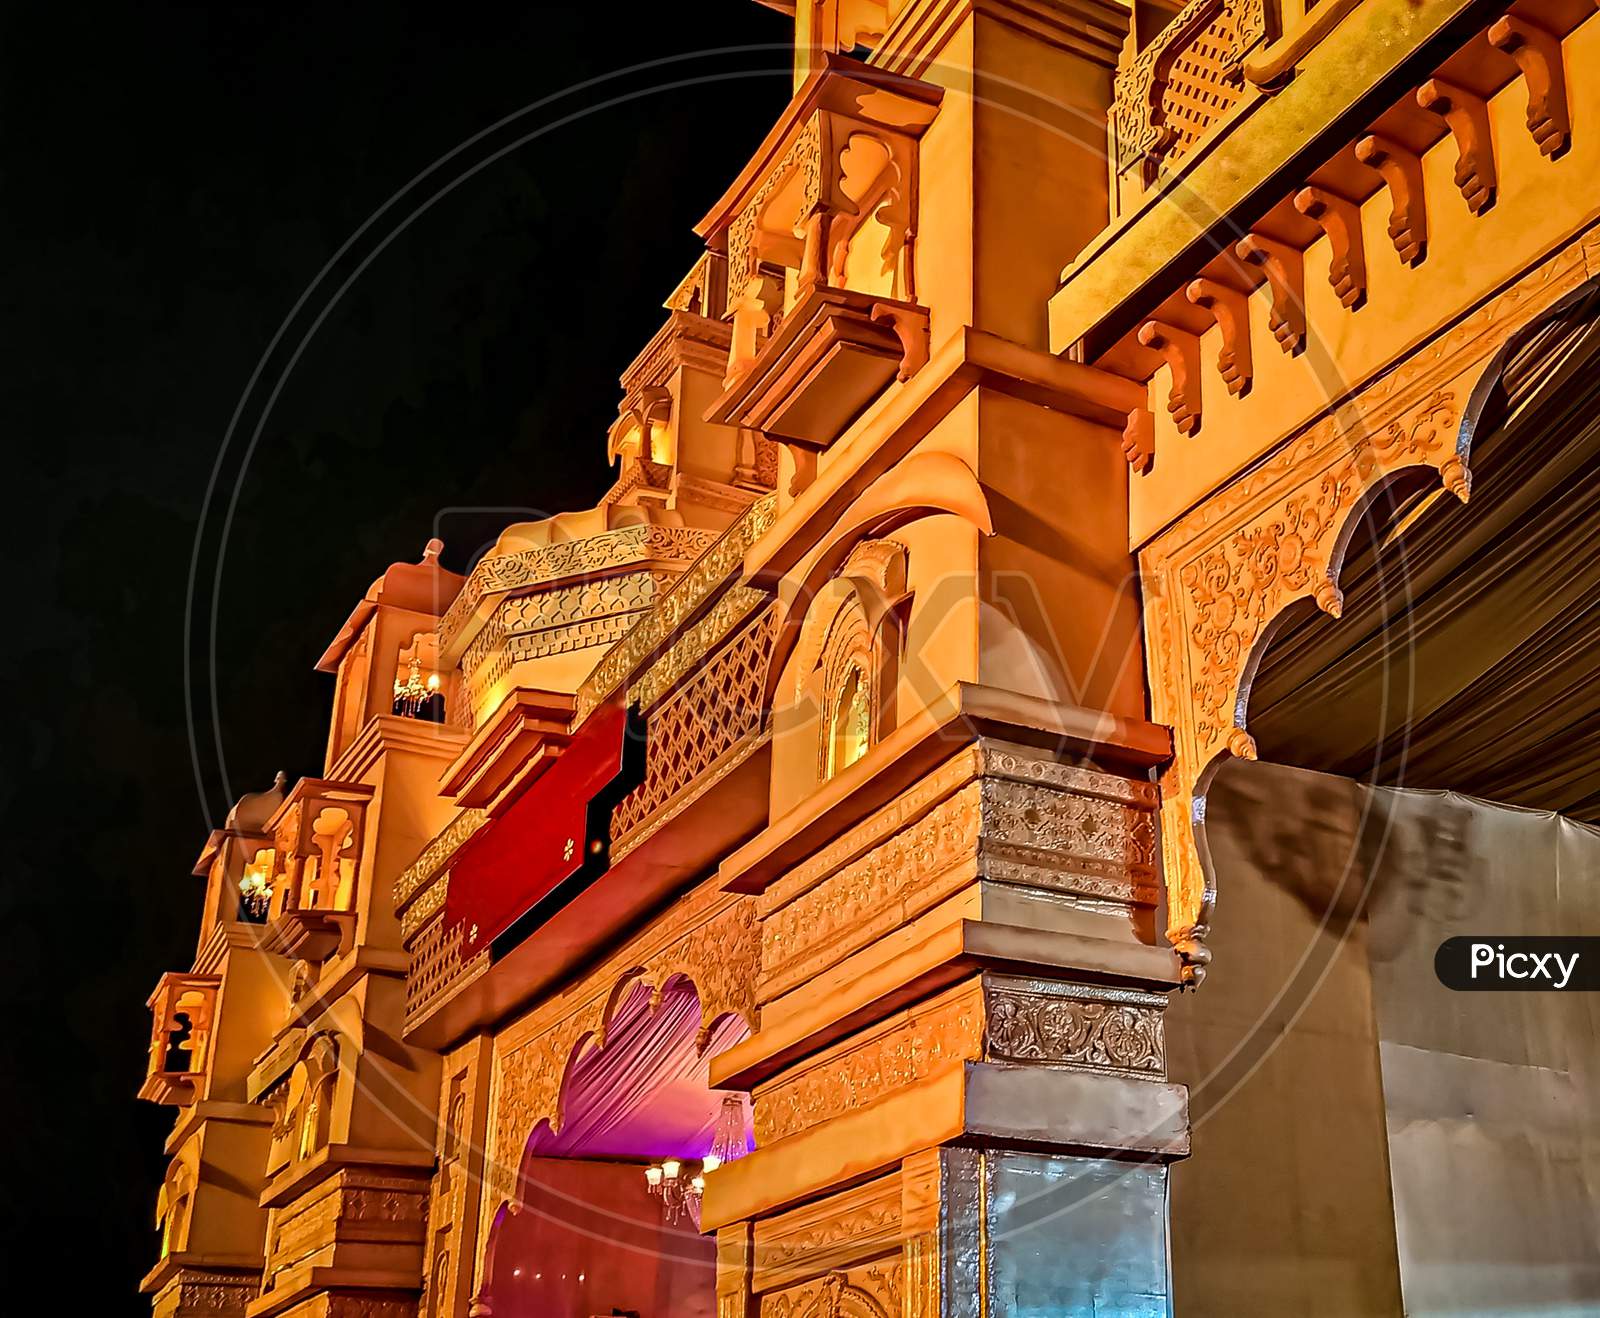 Gallery window of golden palace in moonlight at dark night